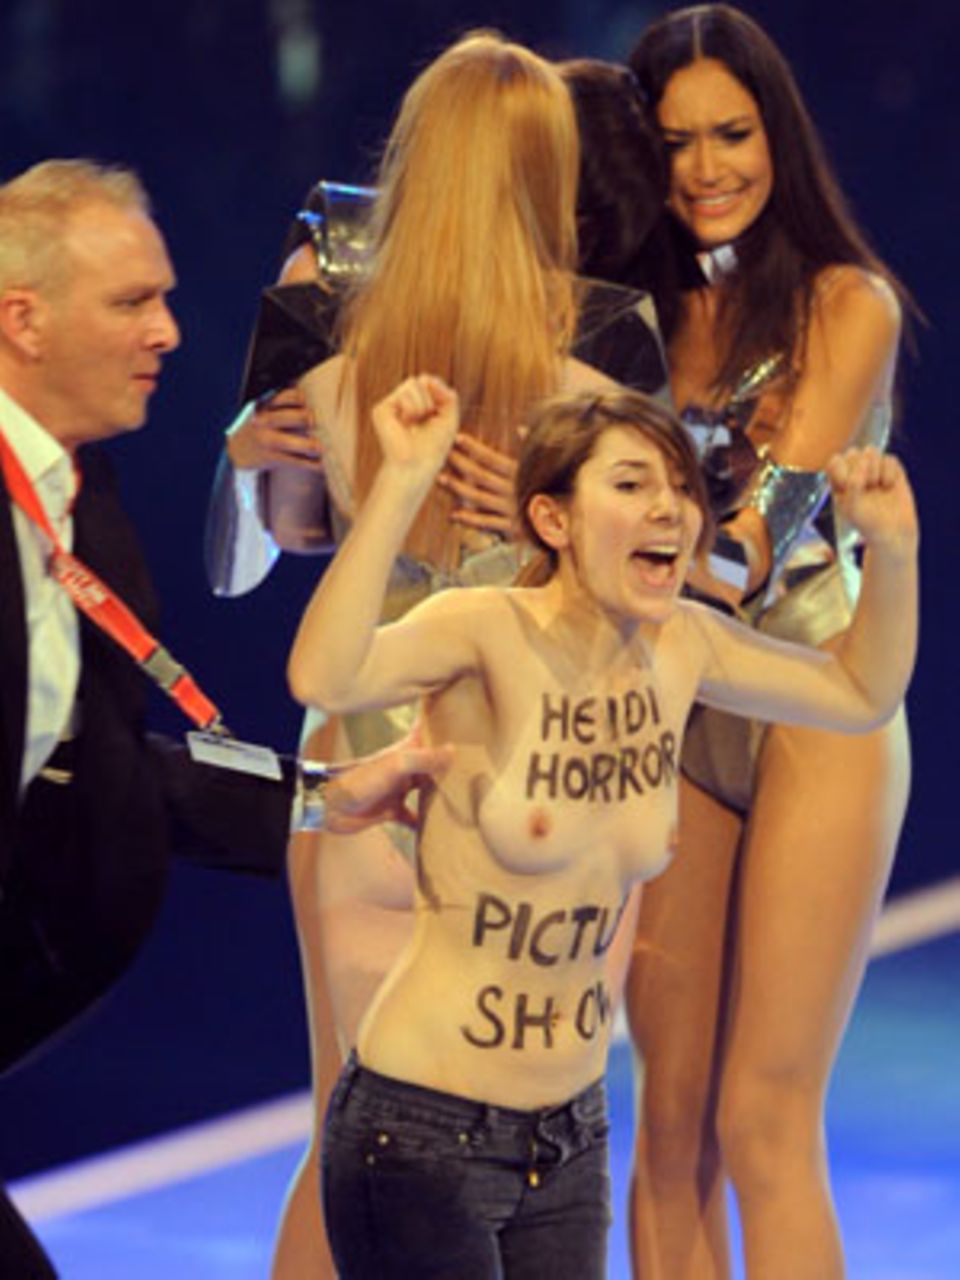 "Germany's Next Topmodel": Eine Horror-Show?